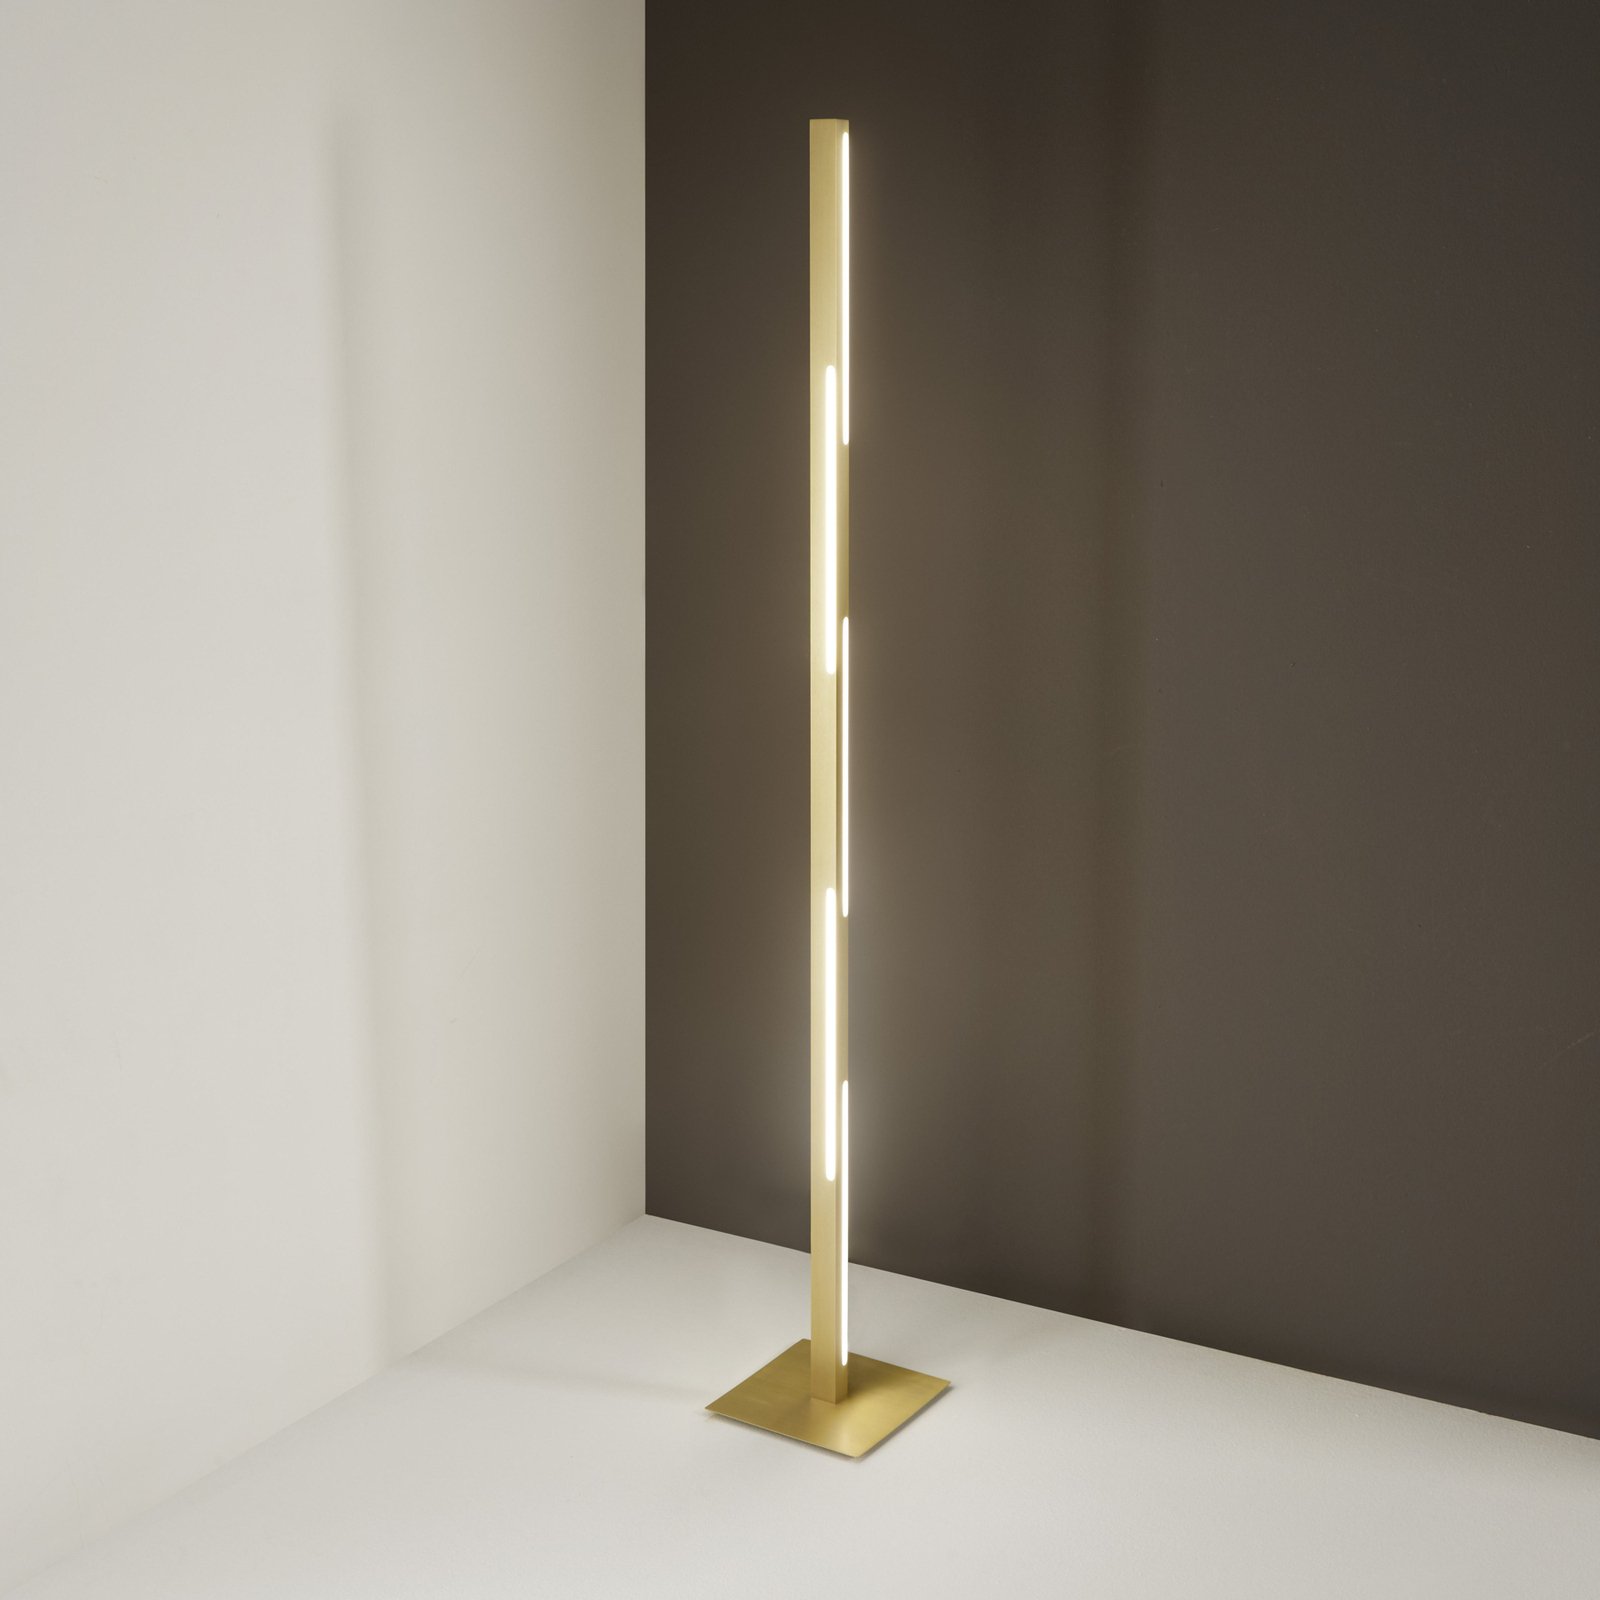 LED-golvlampa Ling, mässing, höjd 165 cm, dimbar, metall